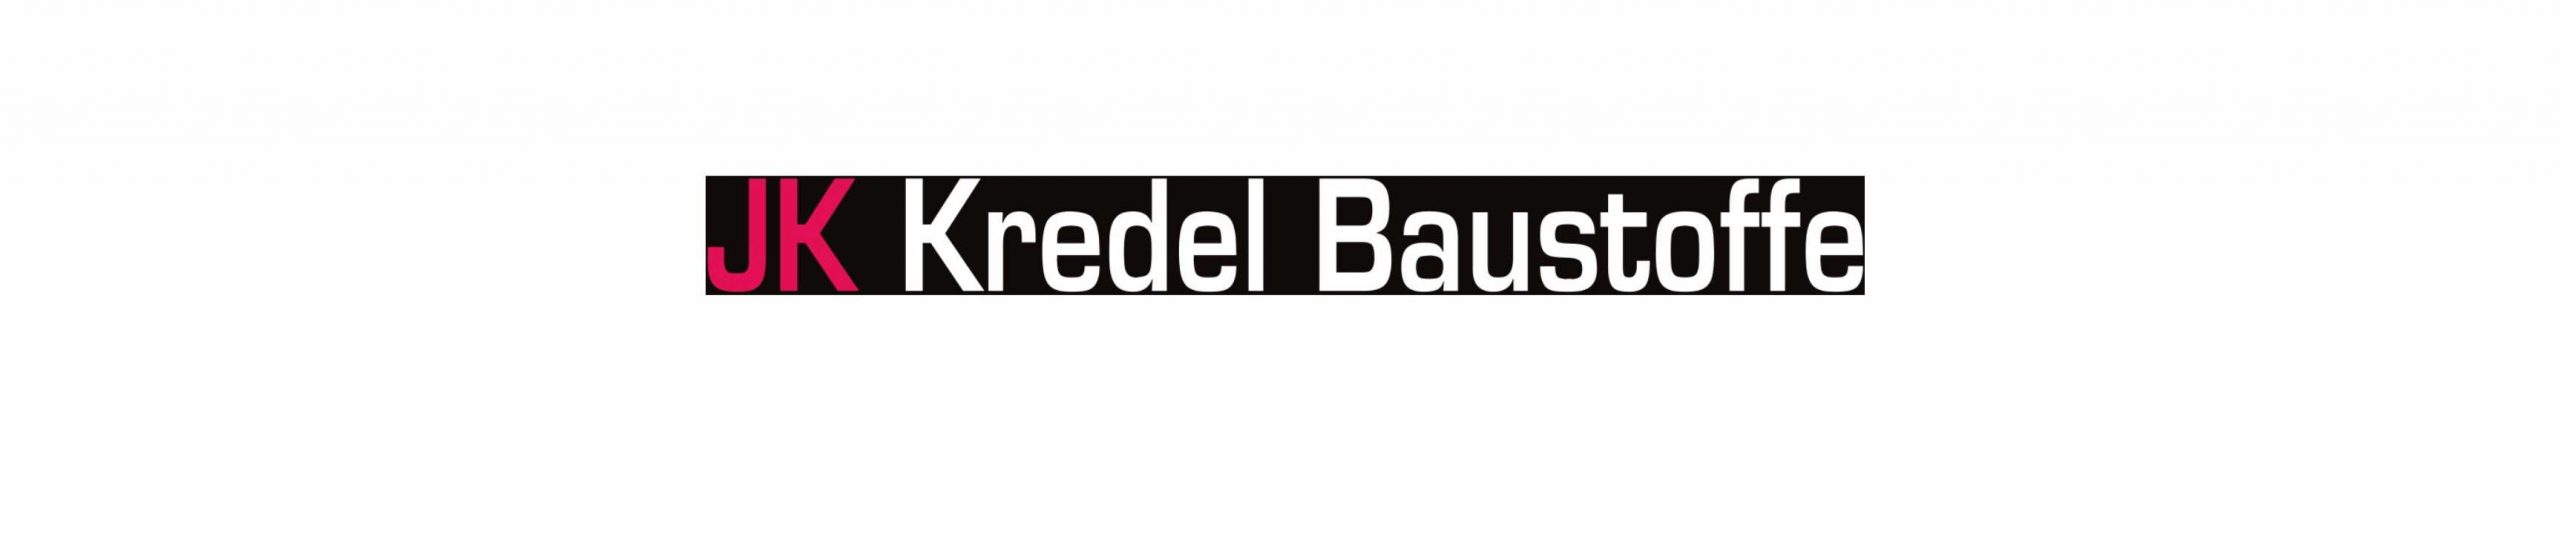 Kredel Baustoffe GmbH - Hallerndorf